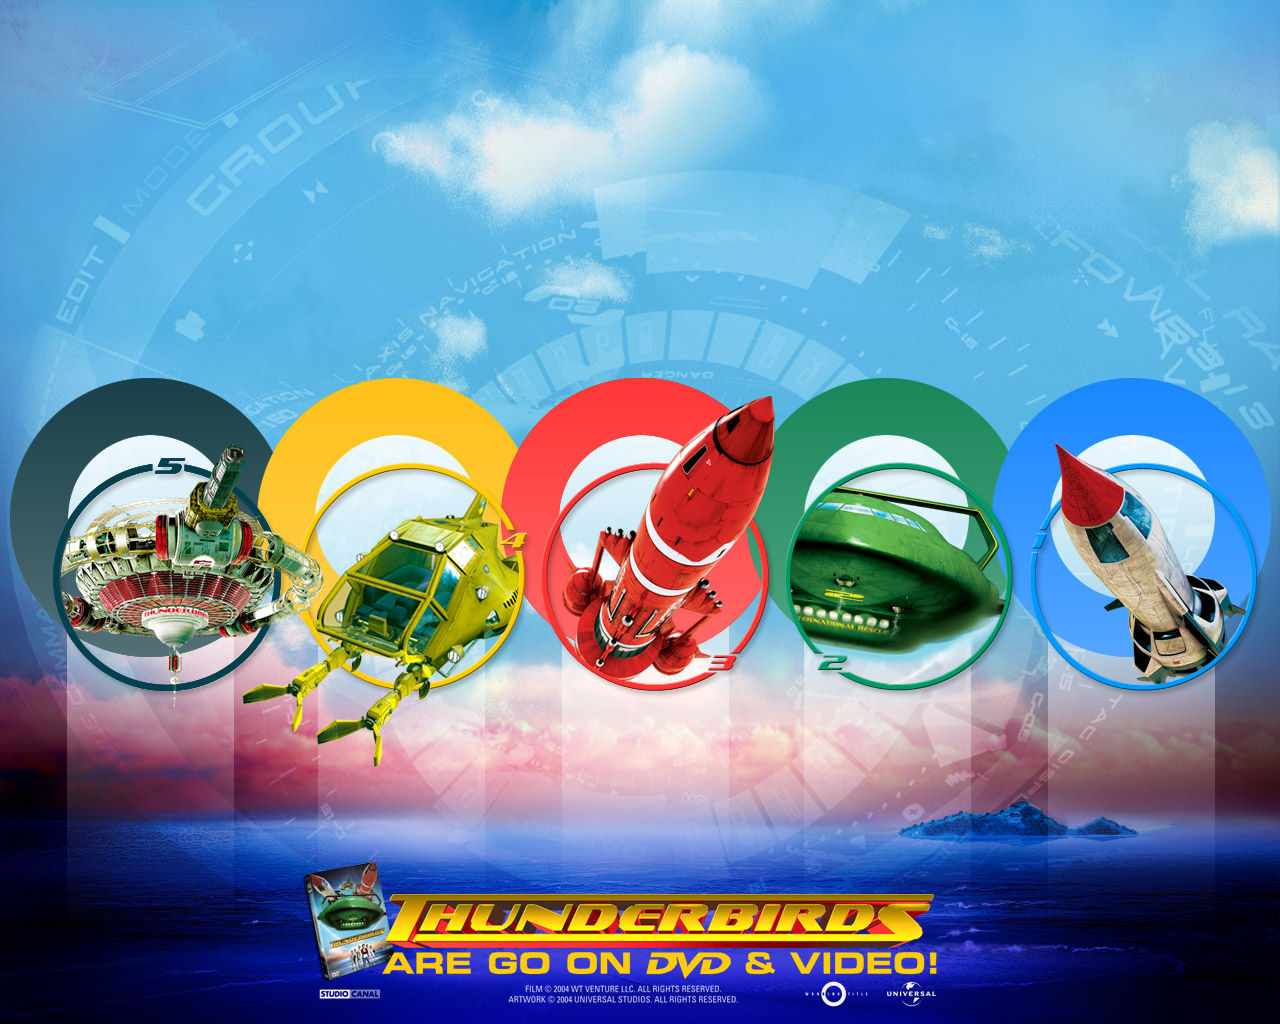 "Thunderbirds" movie desktop wallpaper (1280 x 1024 pixels)